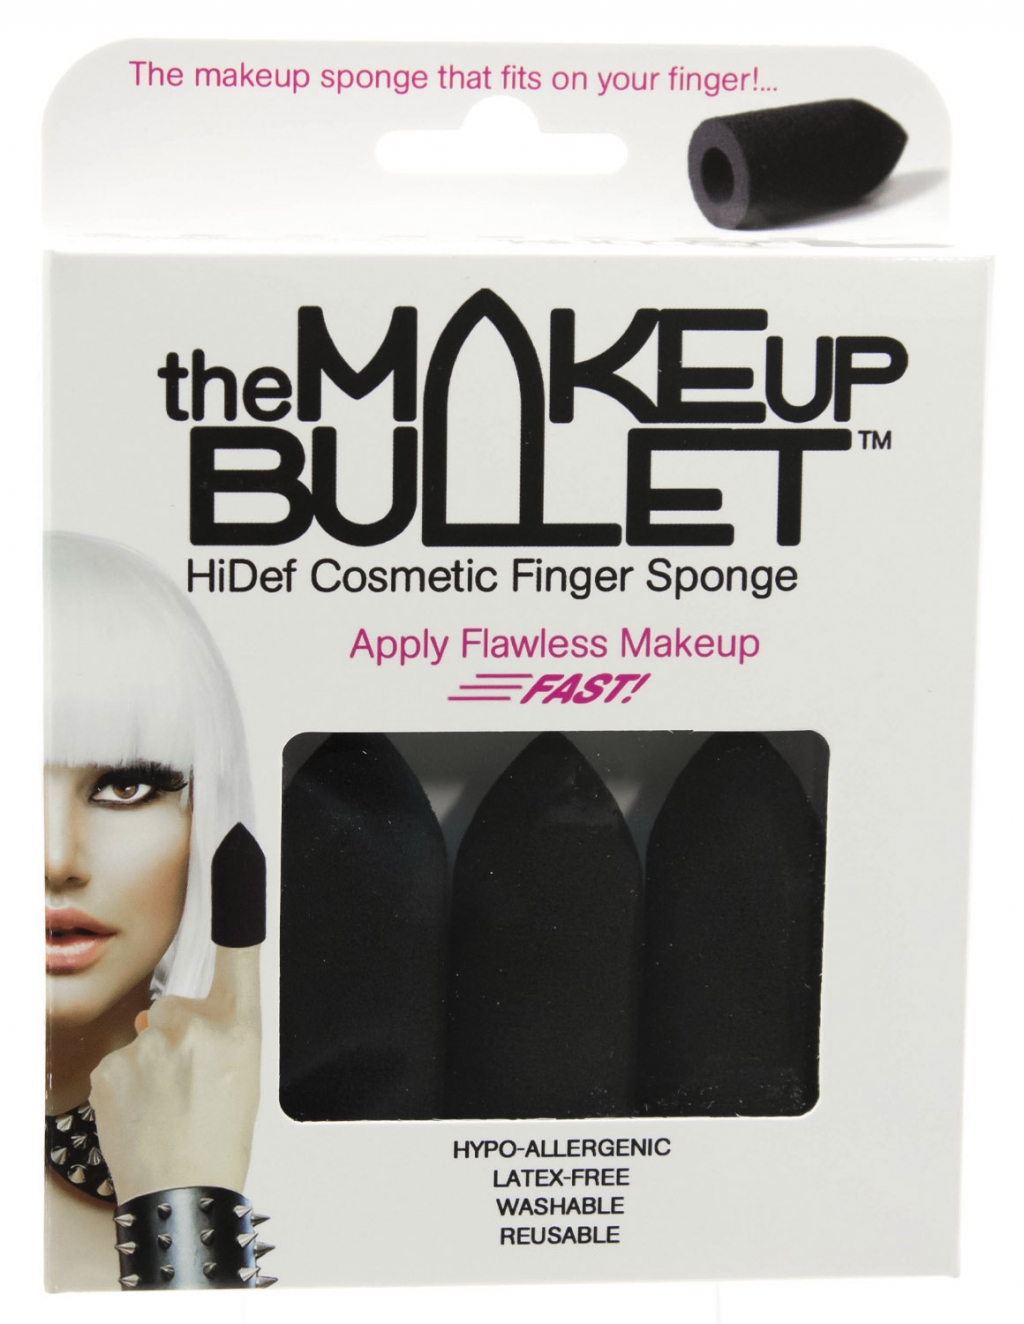 The Makeup Bullet Косметический спонж, 3 шт (The Makeup Bullet, Sponge)  - Купить